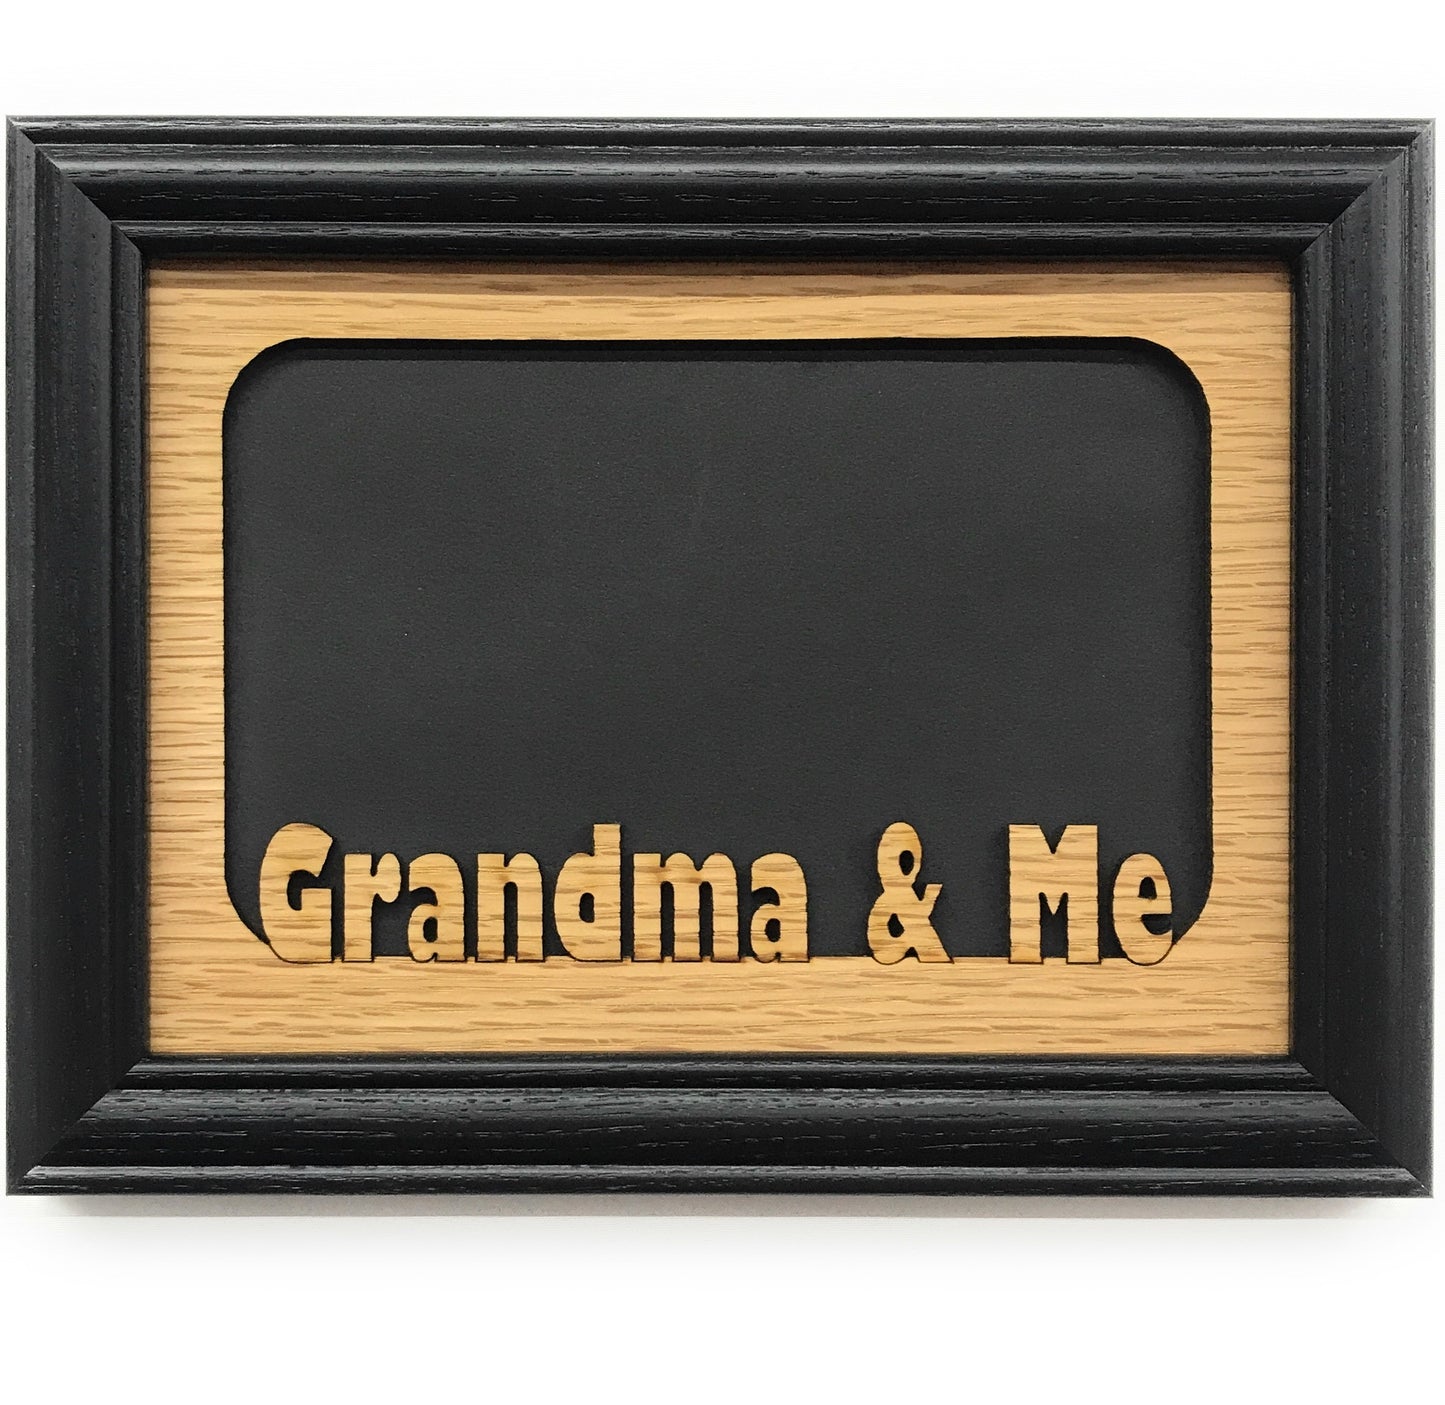 Grandma & Us Picture Frame - 5x7 Frame Hold 4x6 Photo